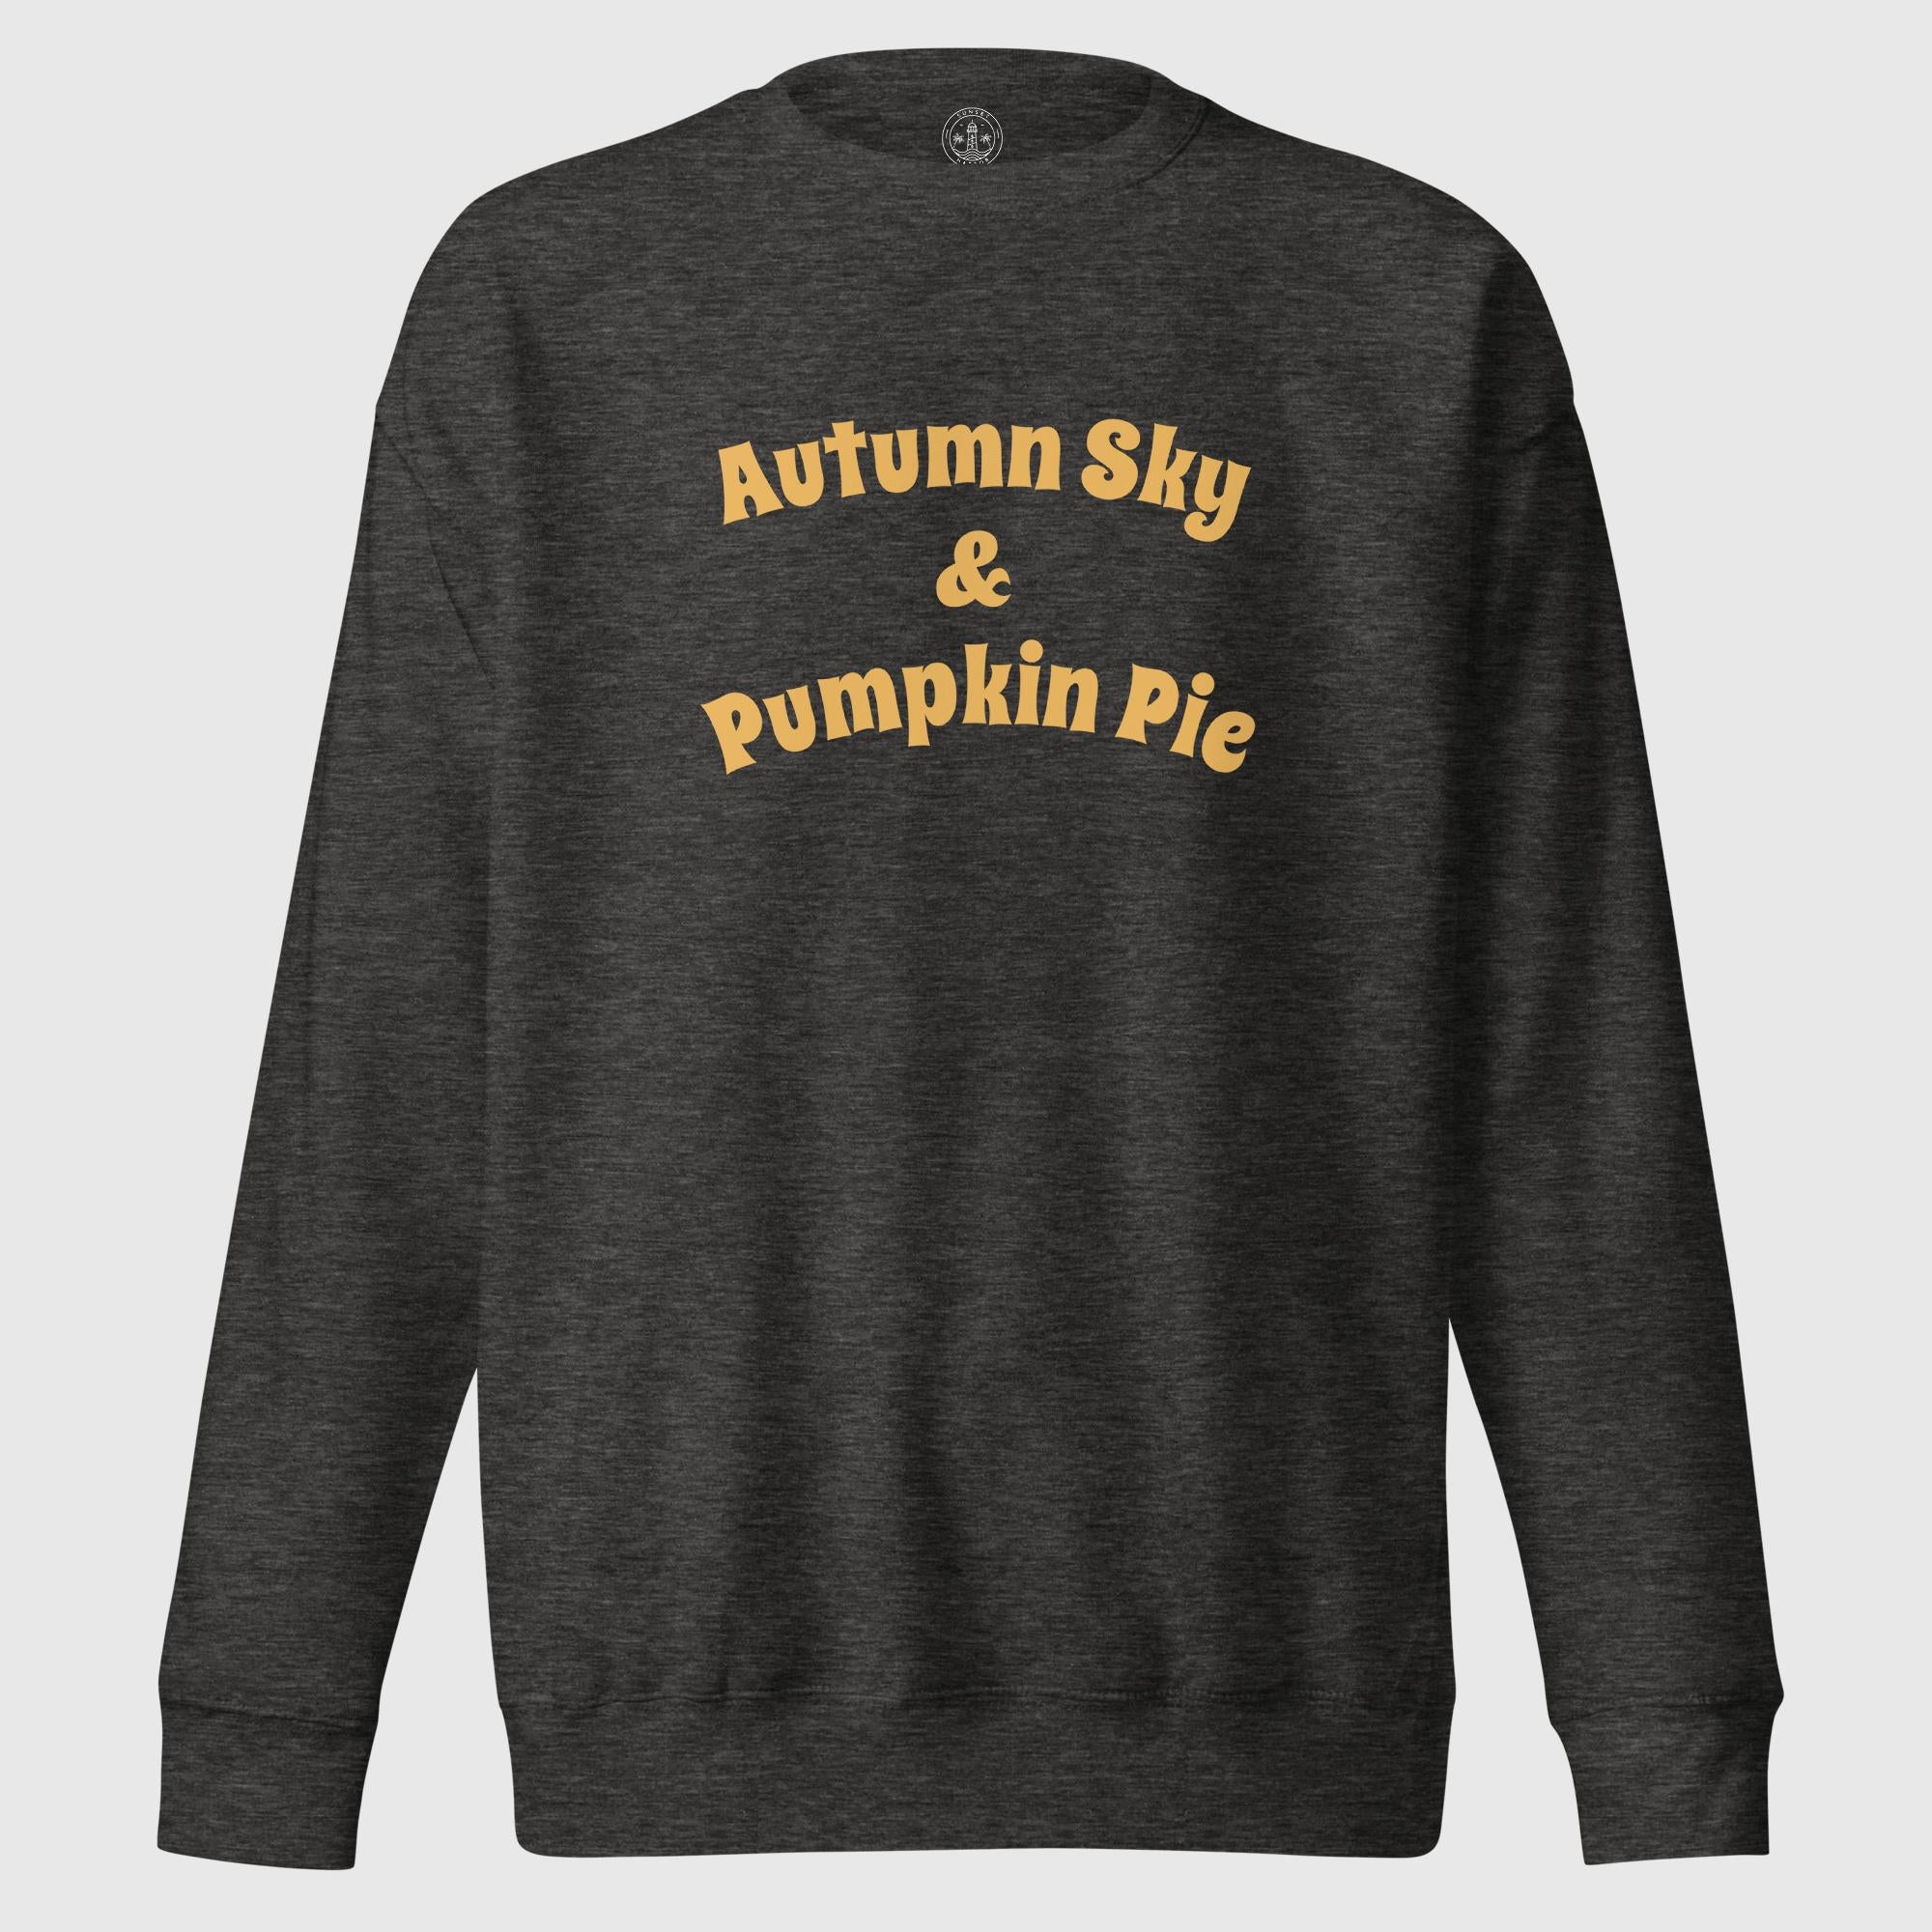 Women's Premium Sweatshirt - Autumn Sky & Pumpkin Pie